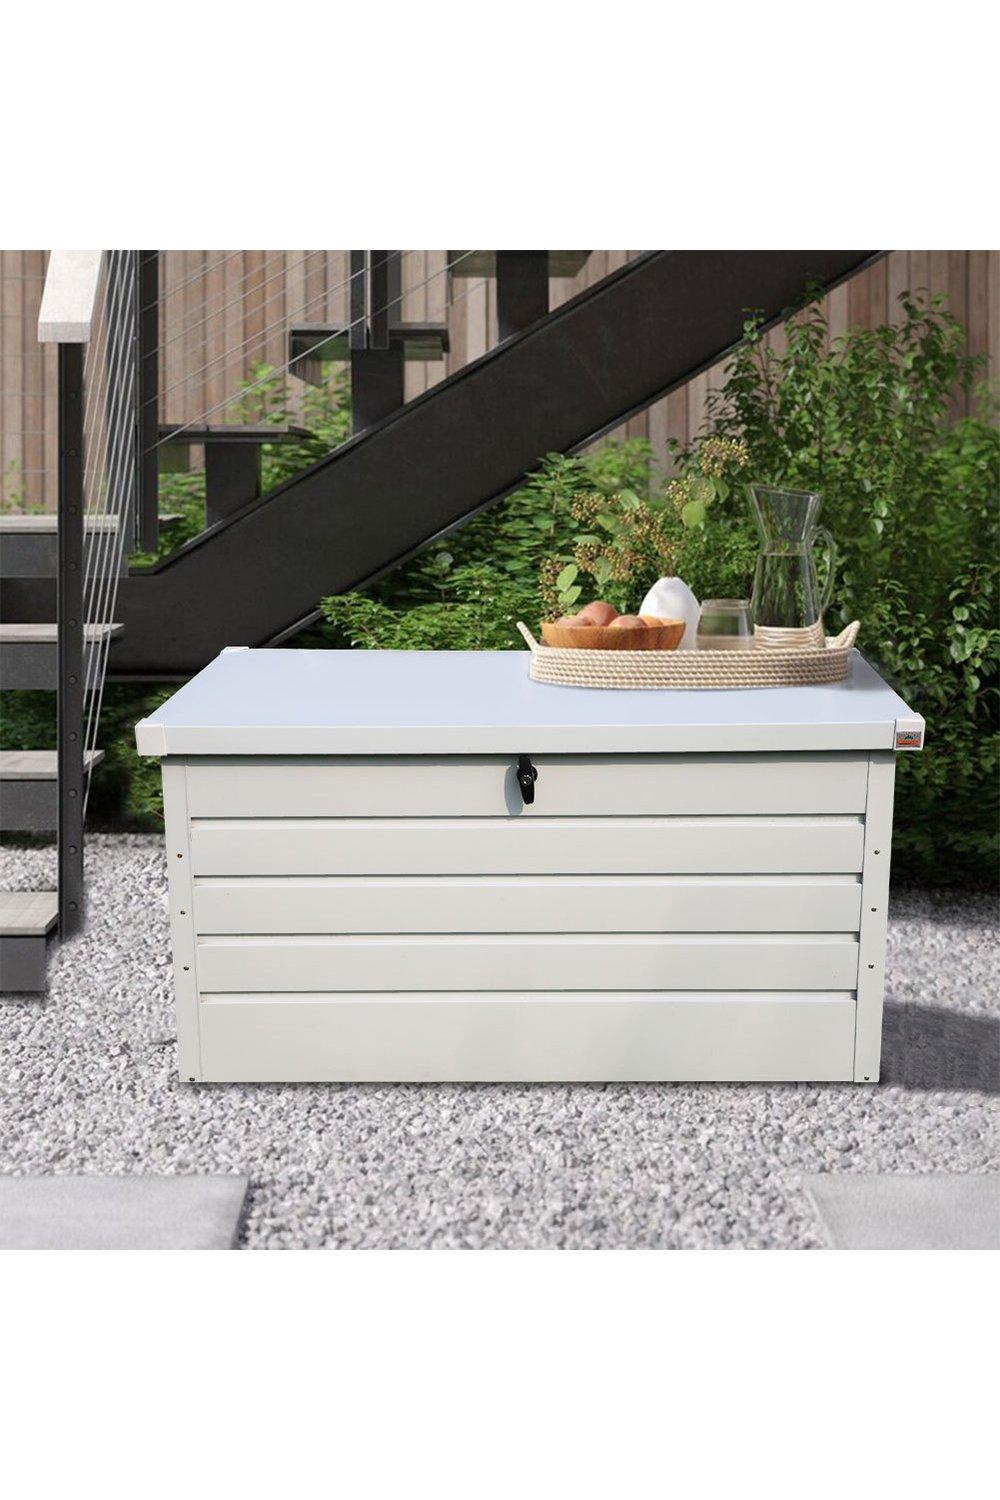 Outdoor Garden Lockable Storage Box for Tools